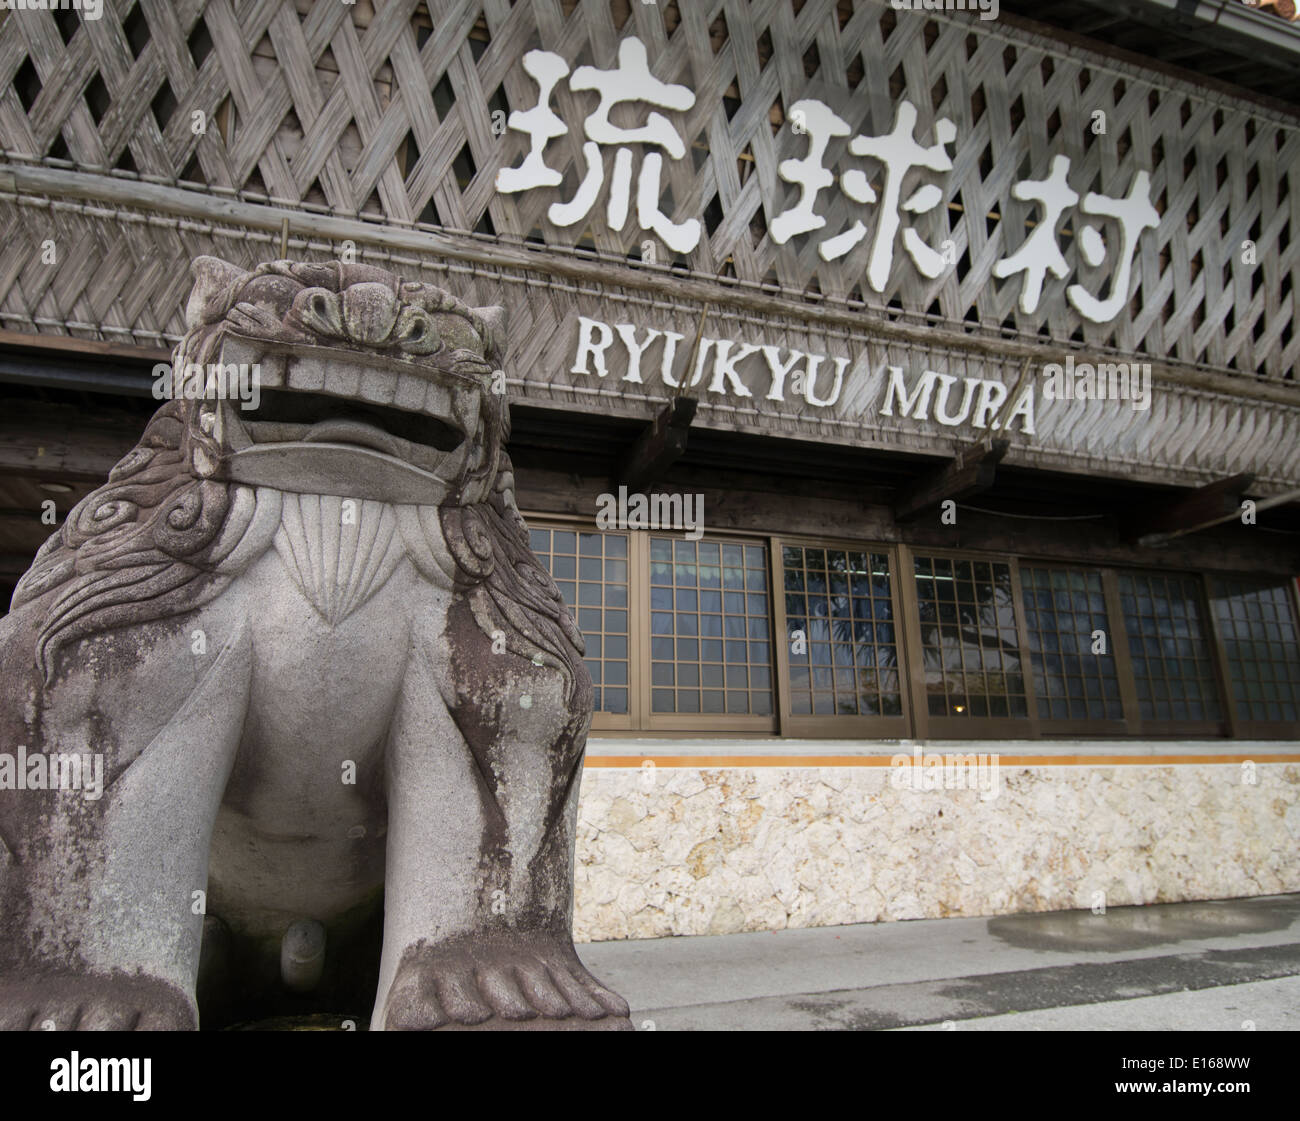 Shisa lion dog statue outside Ryukyu Mura, Yomitan, Okinawa, Japan Stock Photo